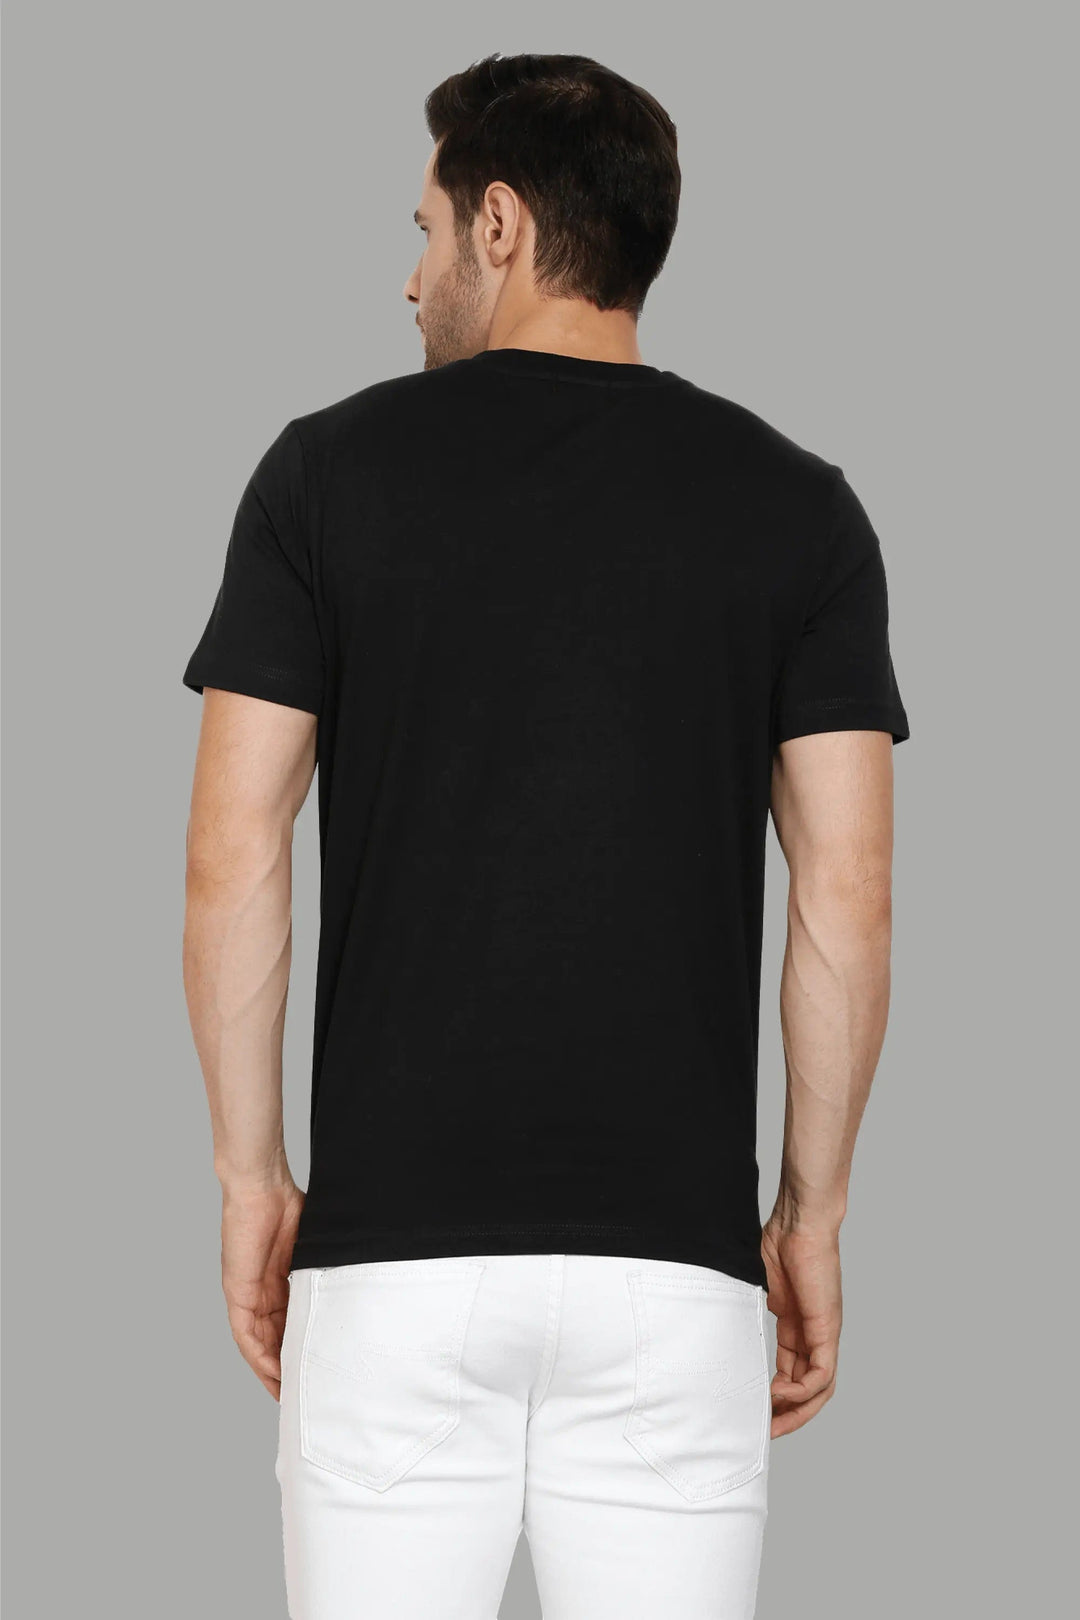 Regular Fit Cotton Black Printed Round Neck Men's T-Shirt - Peplos Jeans 